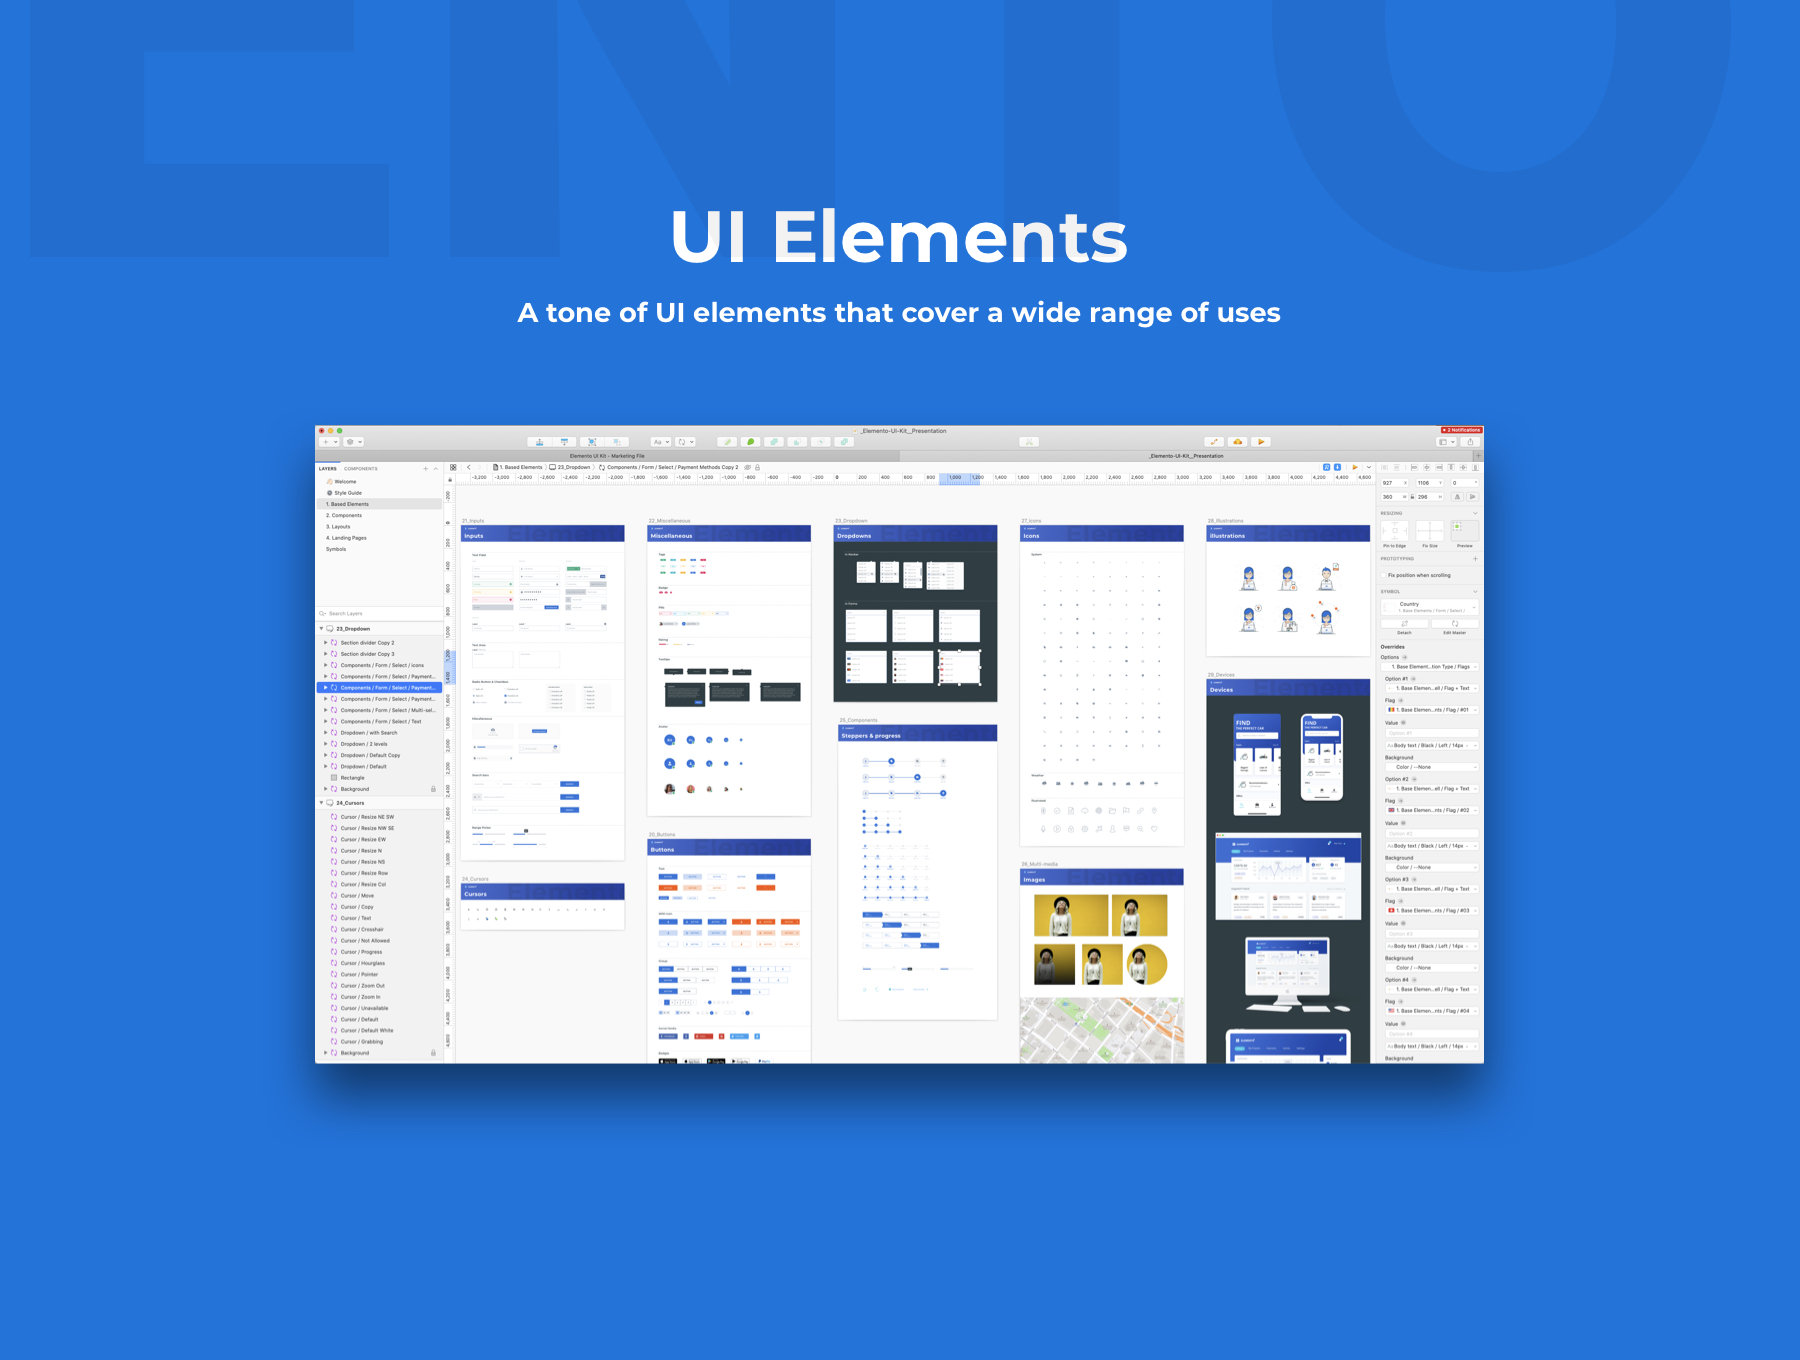 Elemento UI Kit web设计项目组件布局库设计套件集合包-UI/UX-到位啦UI